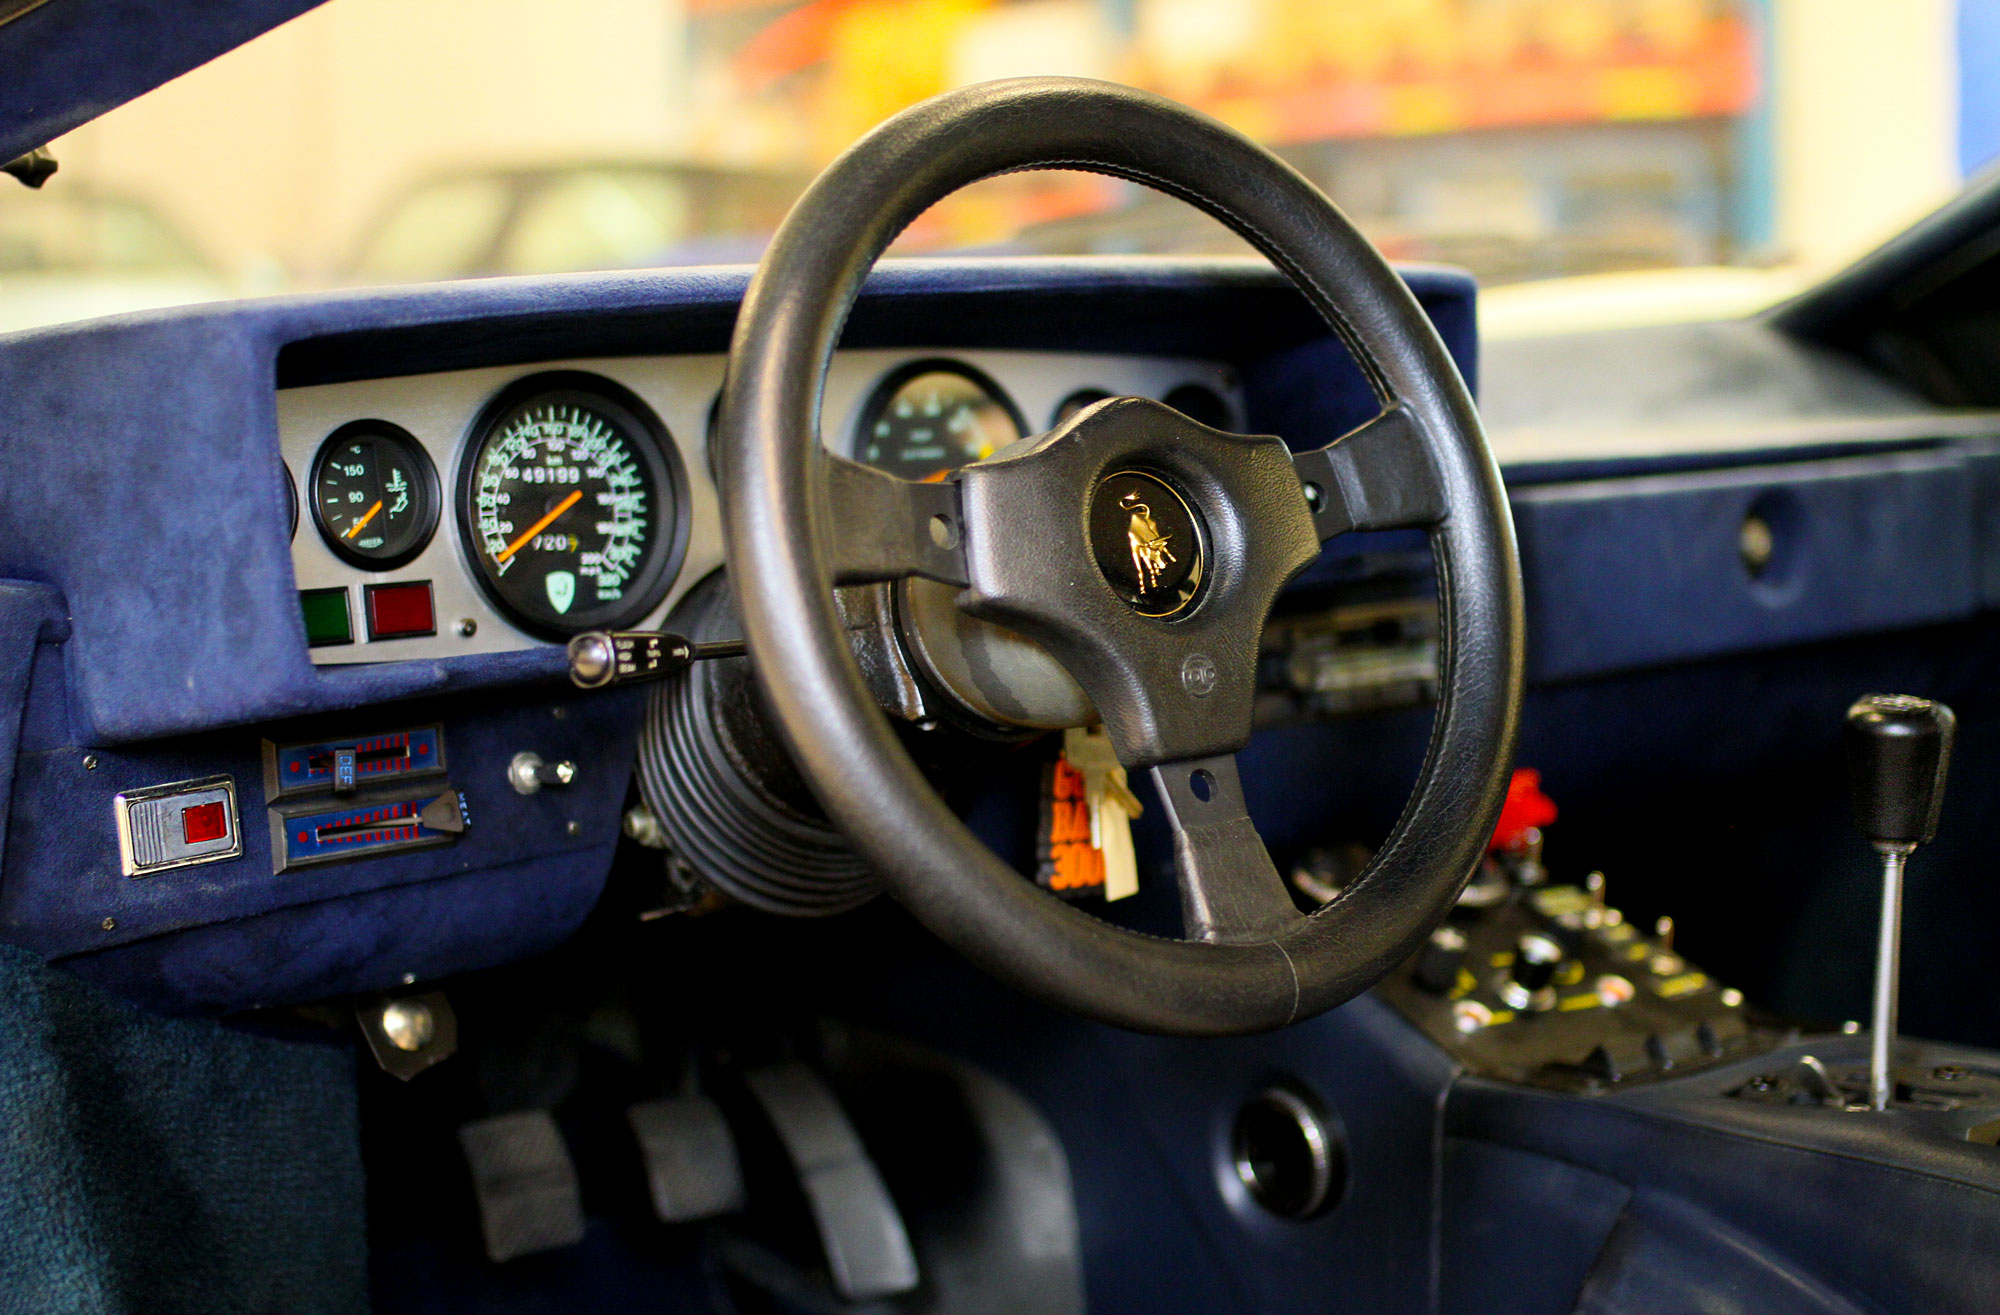 Lamborghini Countach Blue interior with leather and mocha